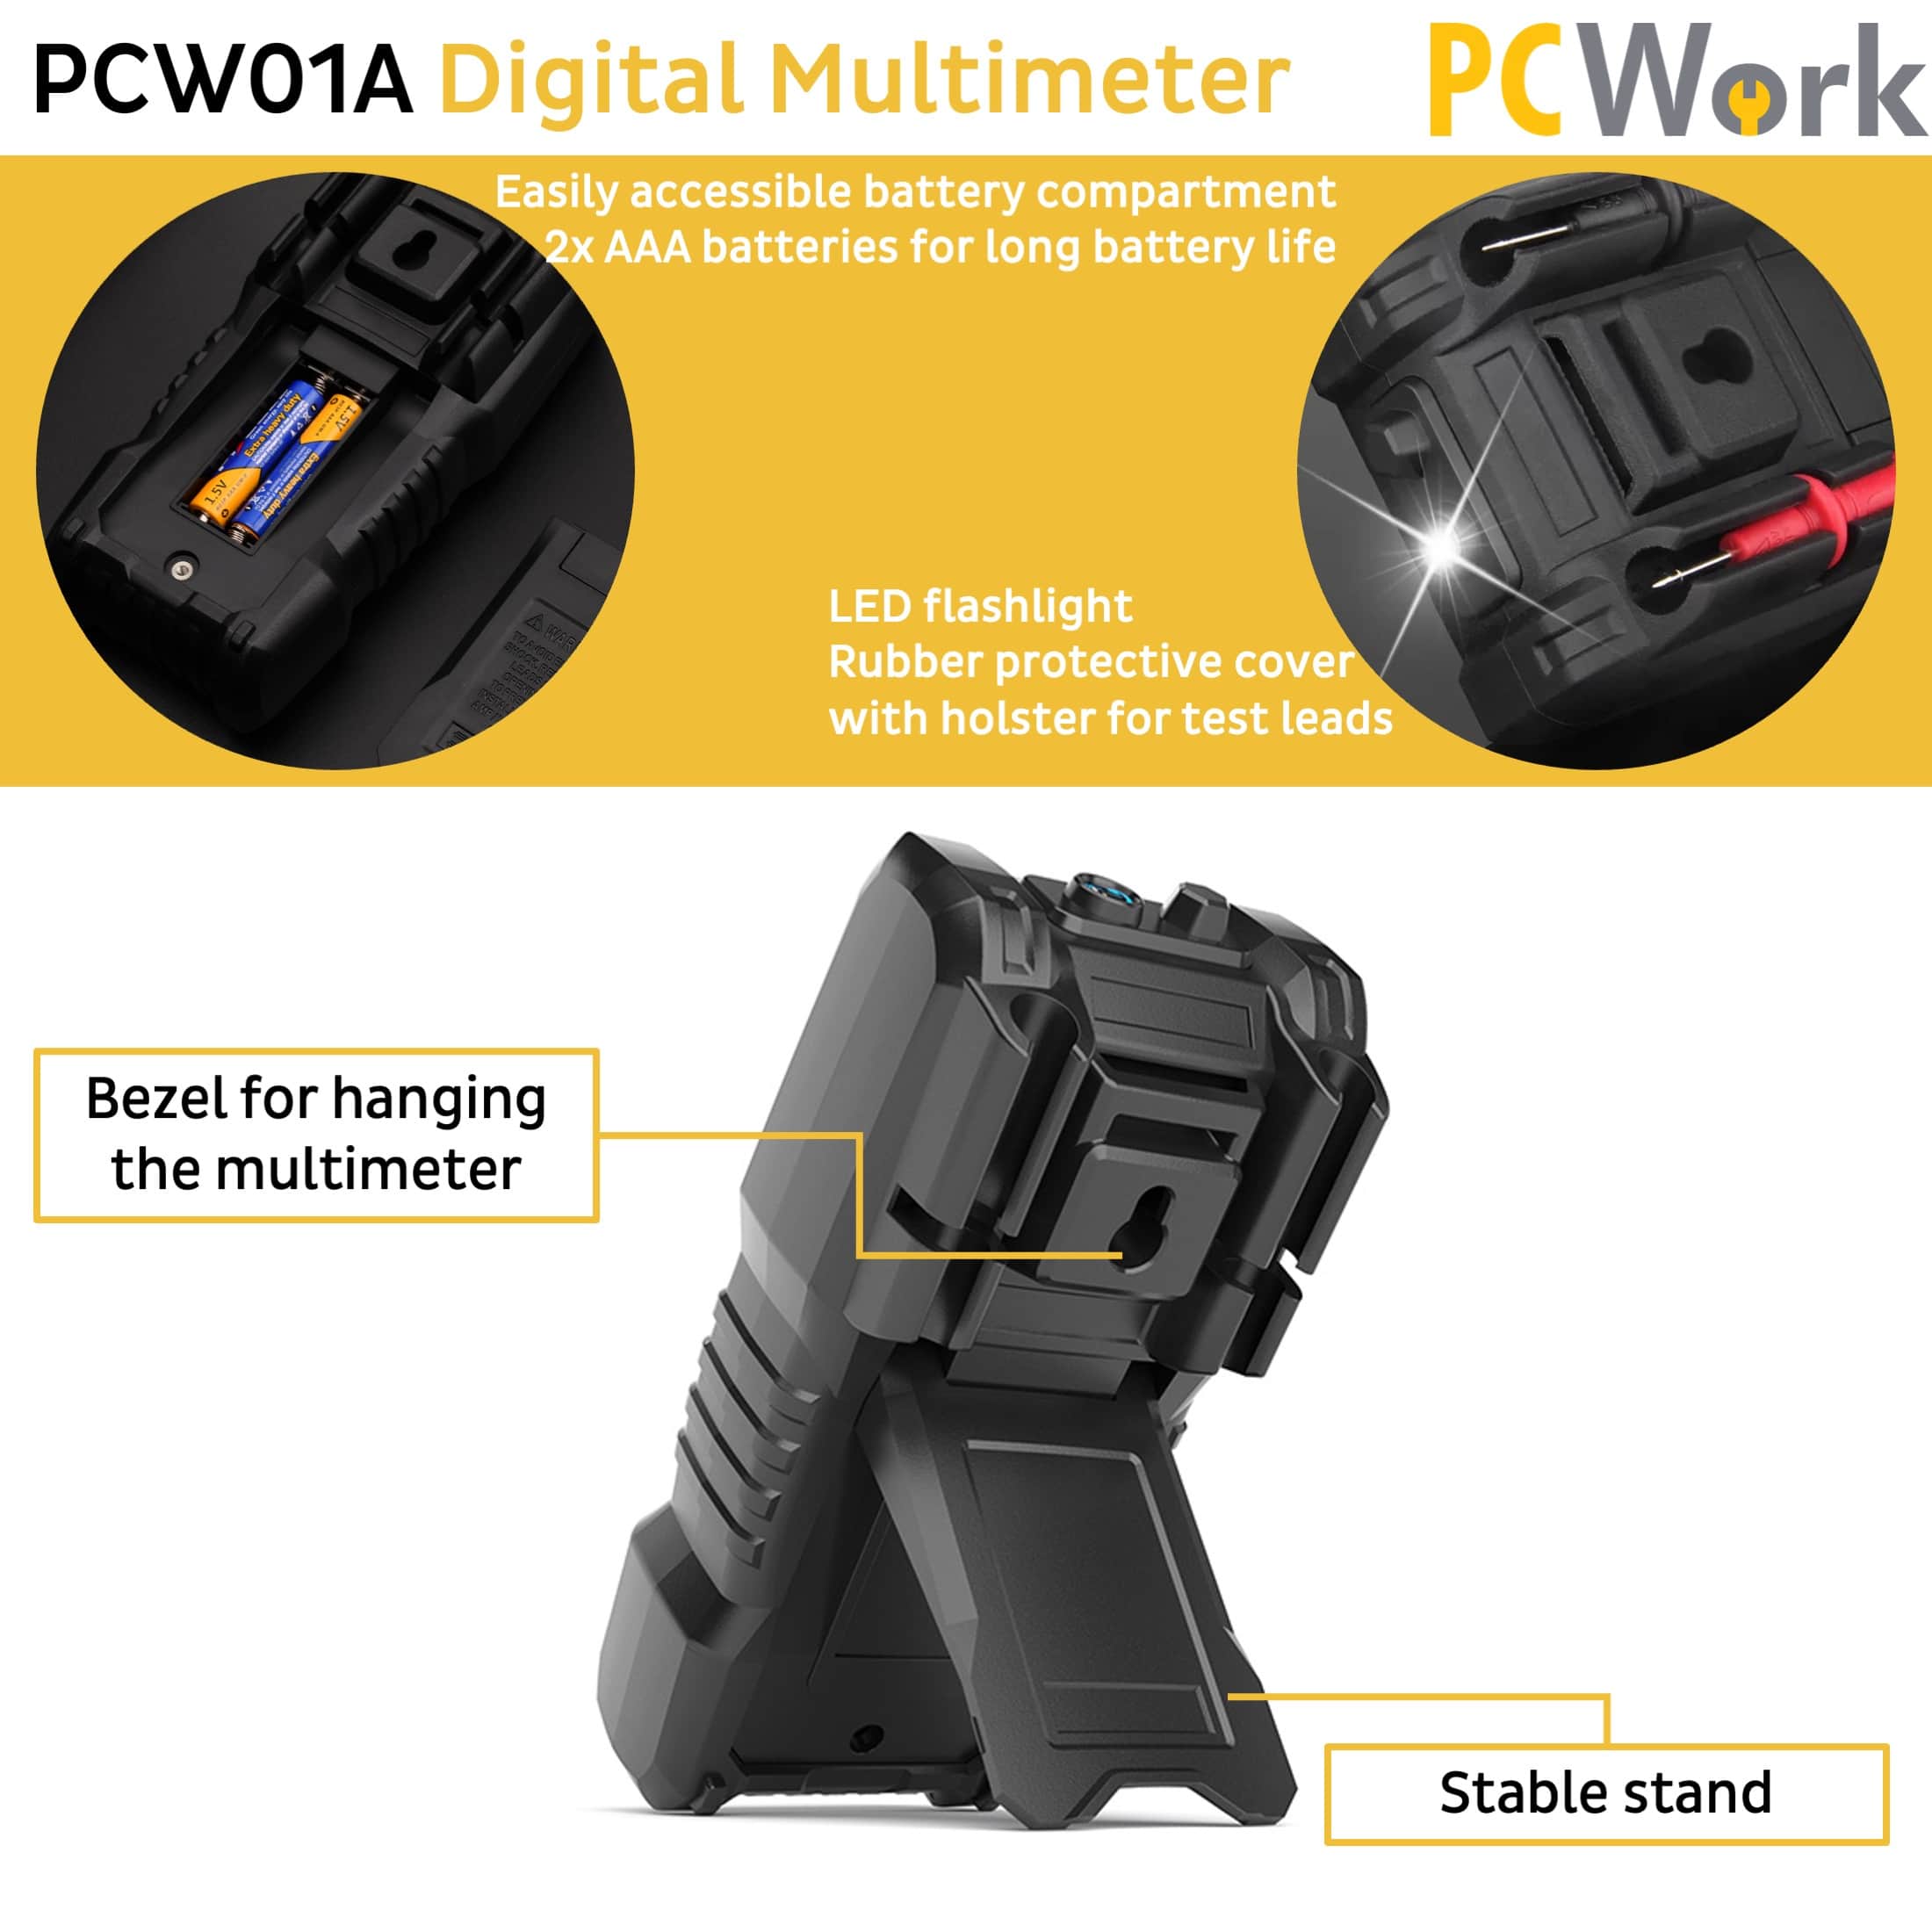 PCW01A Digitalmultimeter, 2000 Counts, CAT III 600V